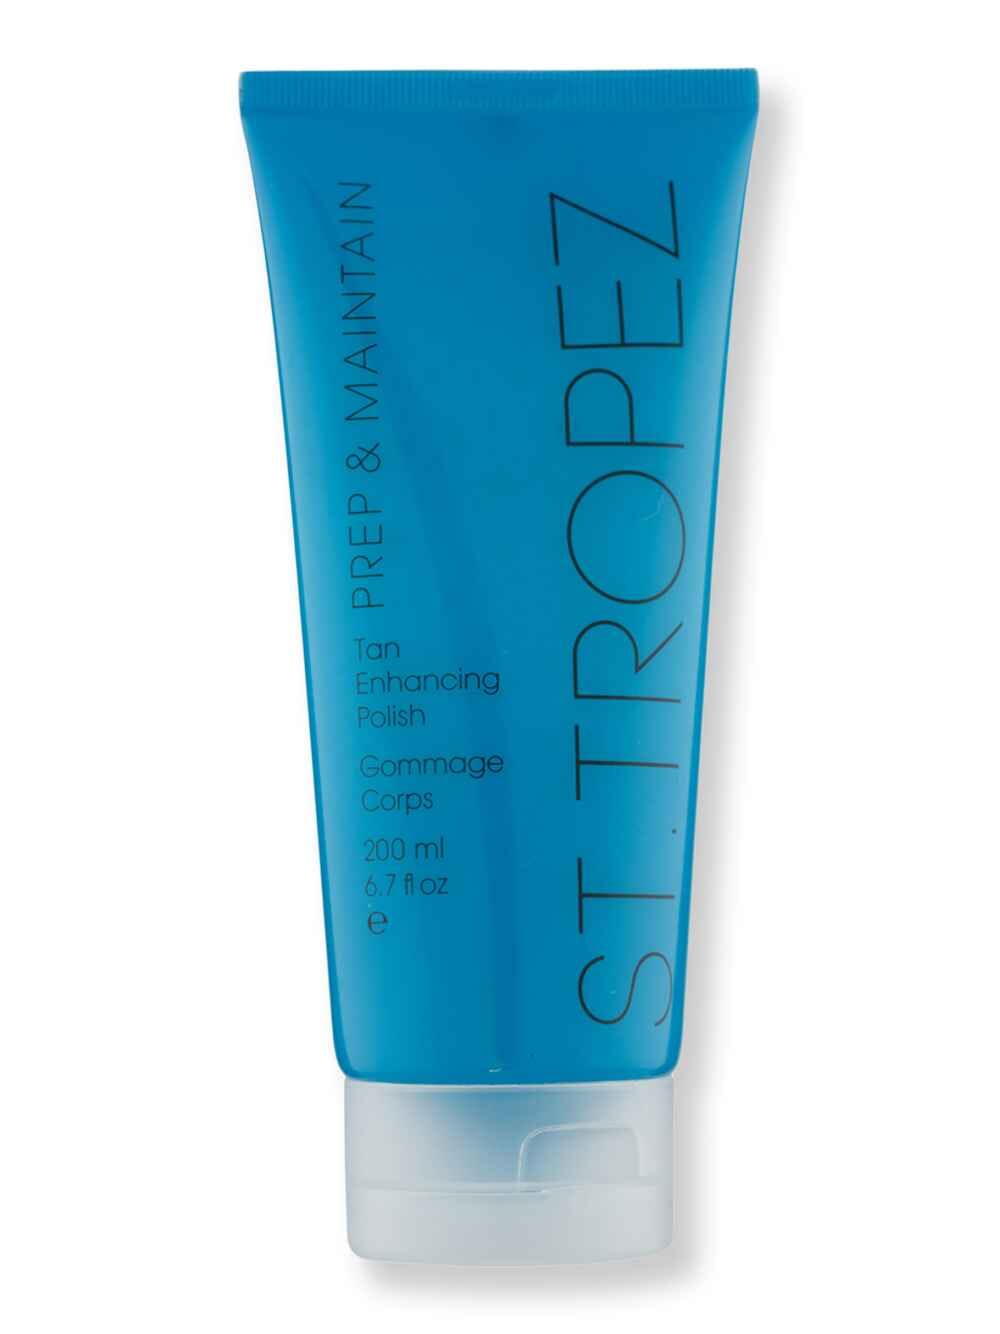 St. Tropez St. Tropez Tan Enhancing Body Polish 6.7 oz200 ml Body Scrubs & Exfoliants 